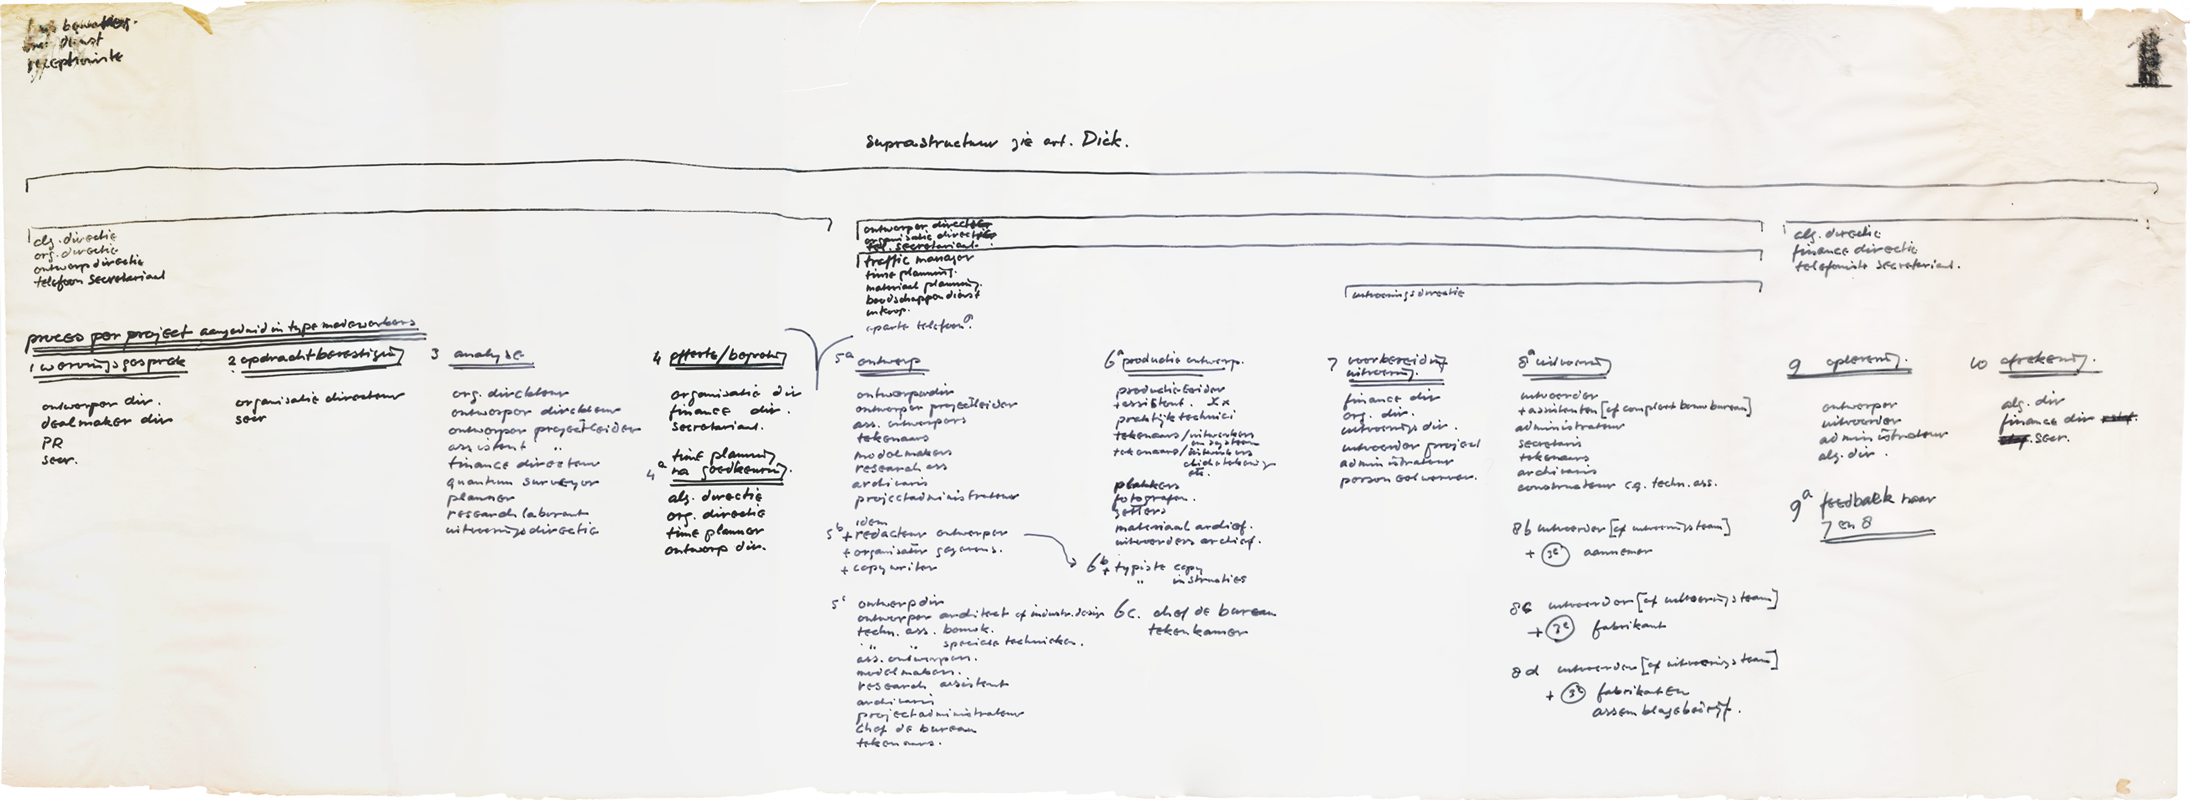 1970 Benno's organogram